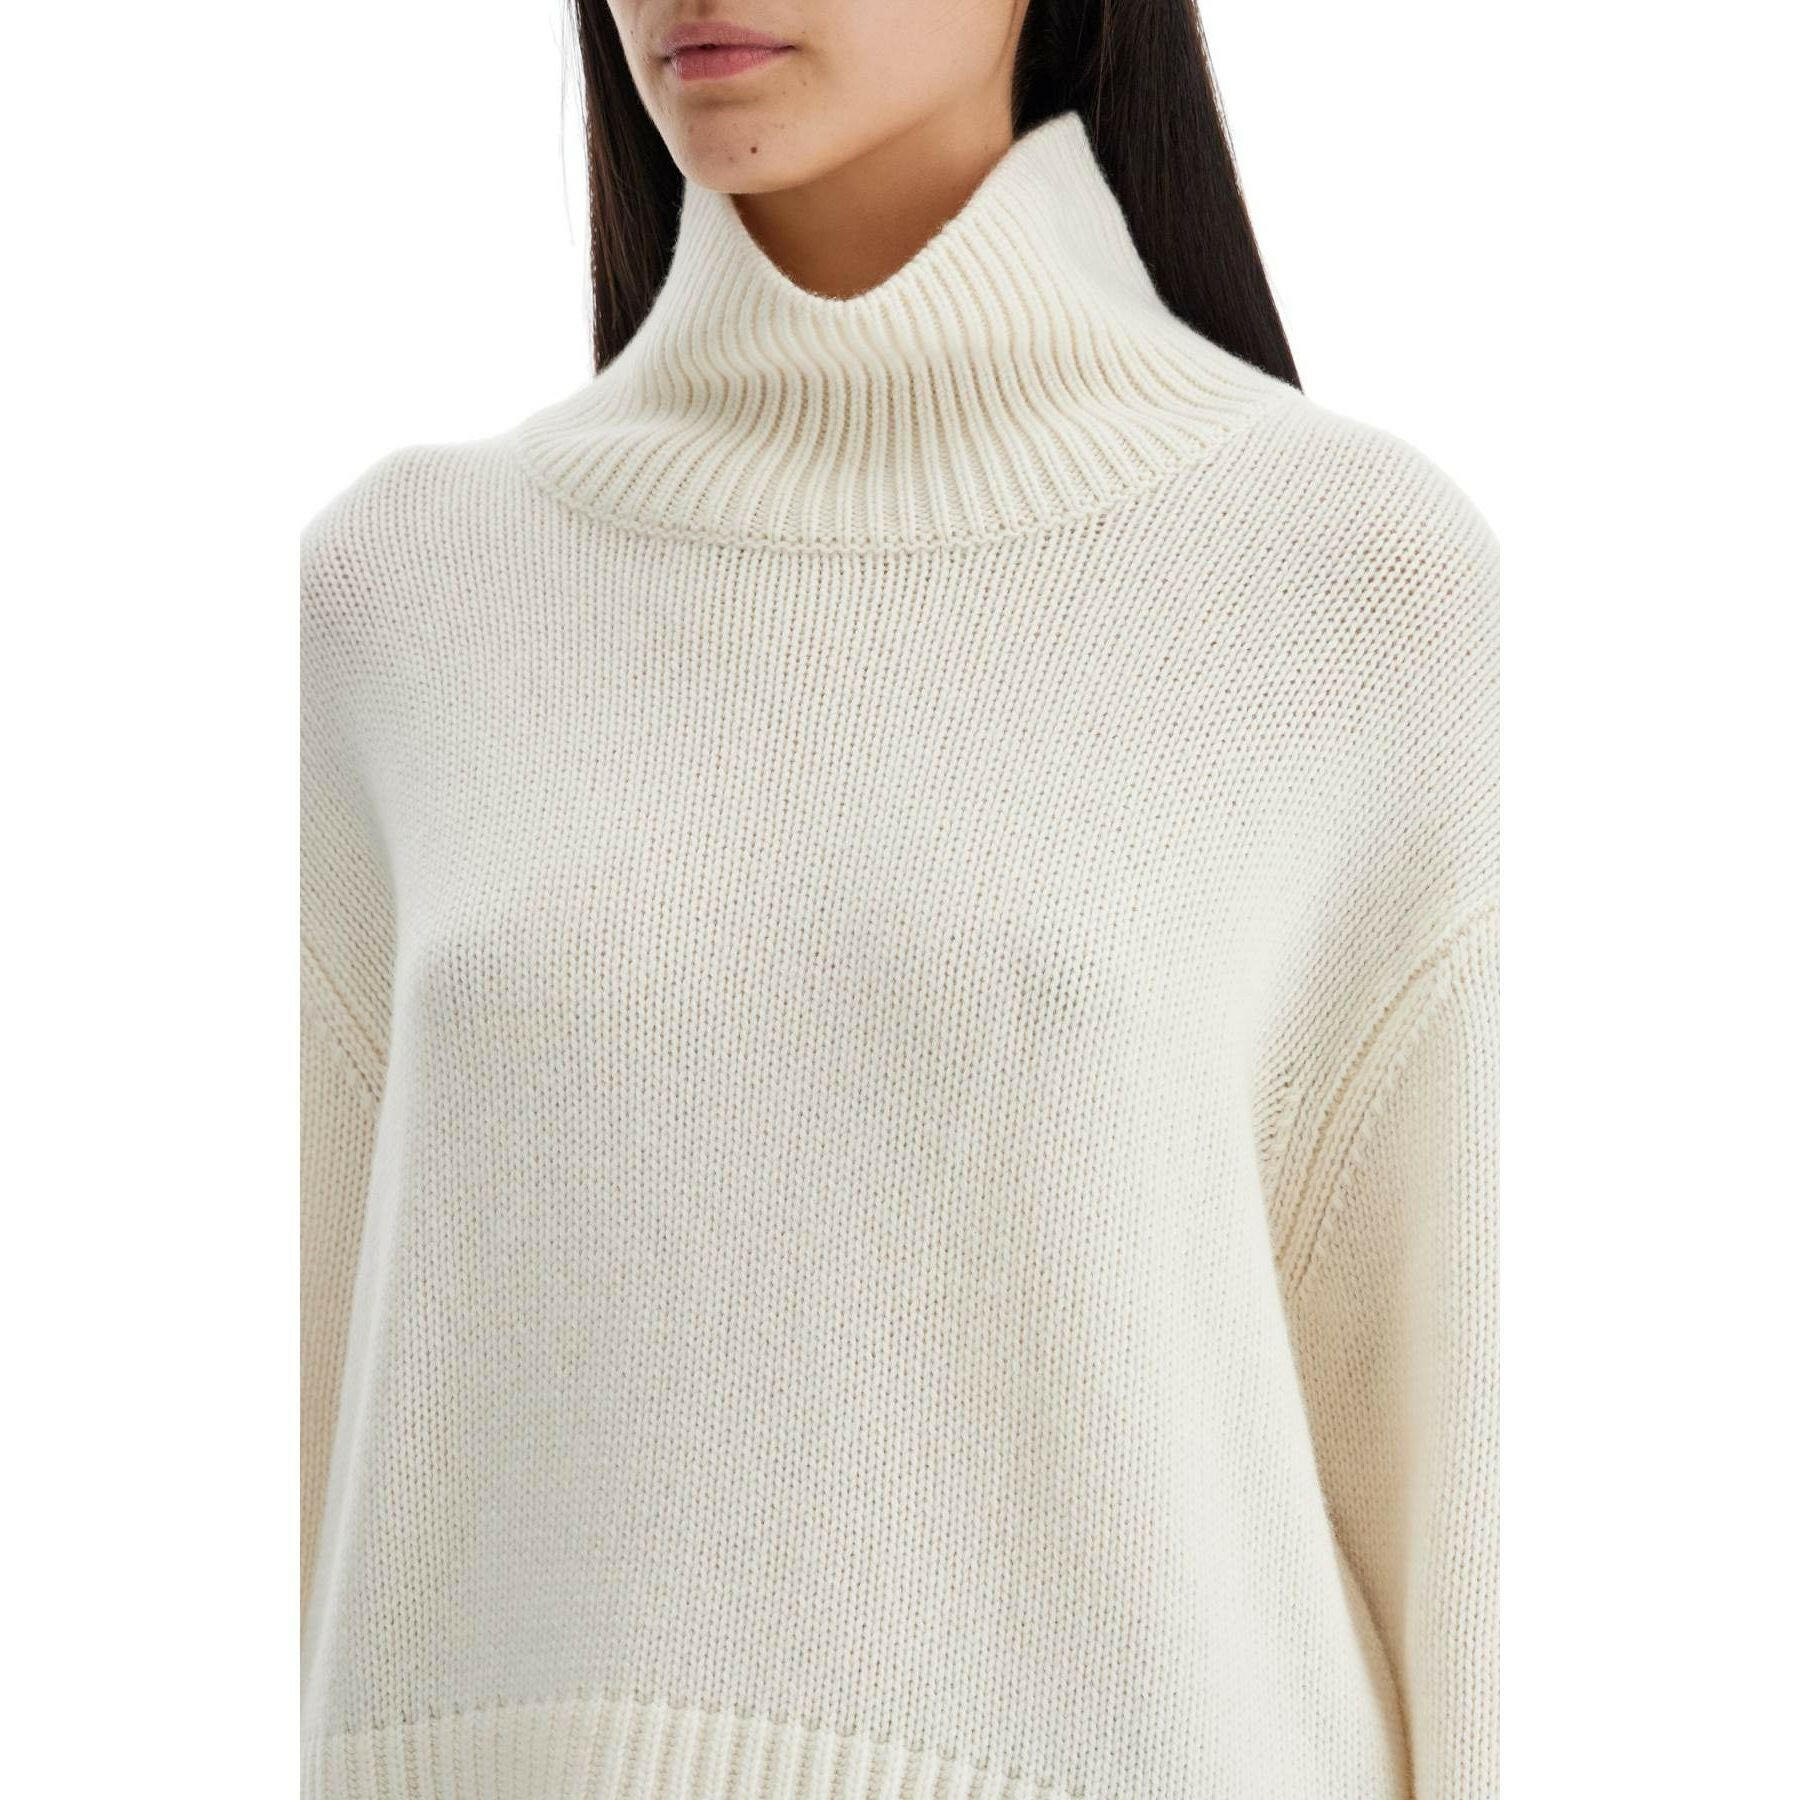 'Fleur' High Neck Cashmere Sweater.